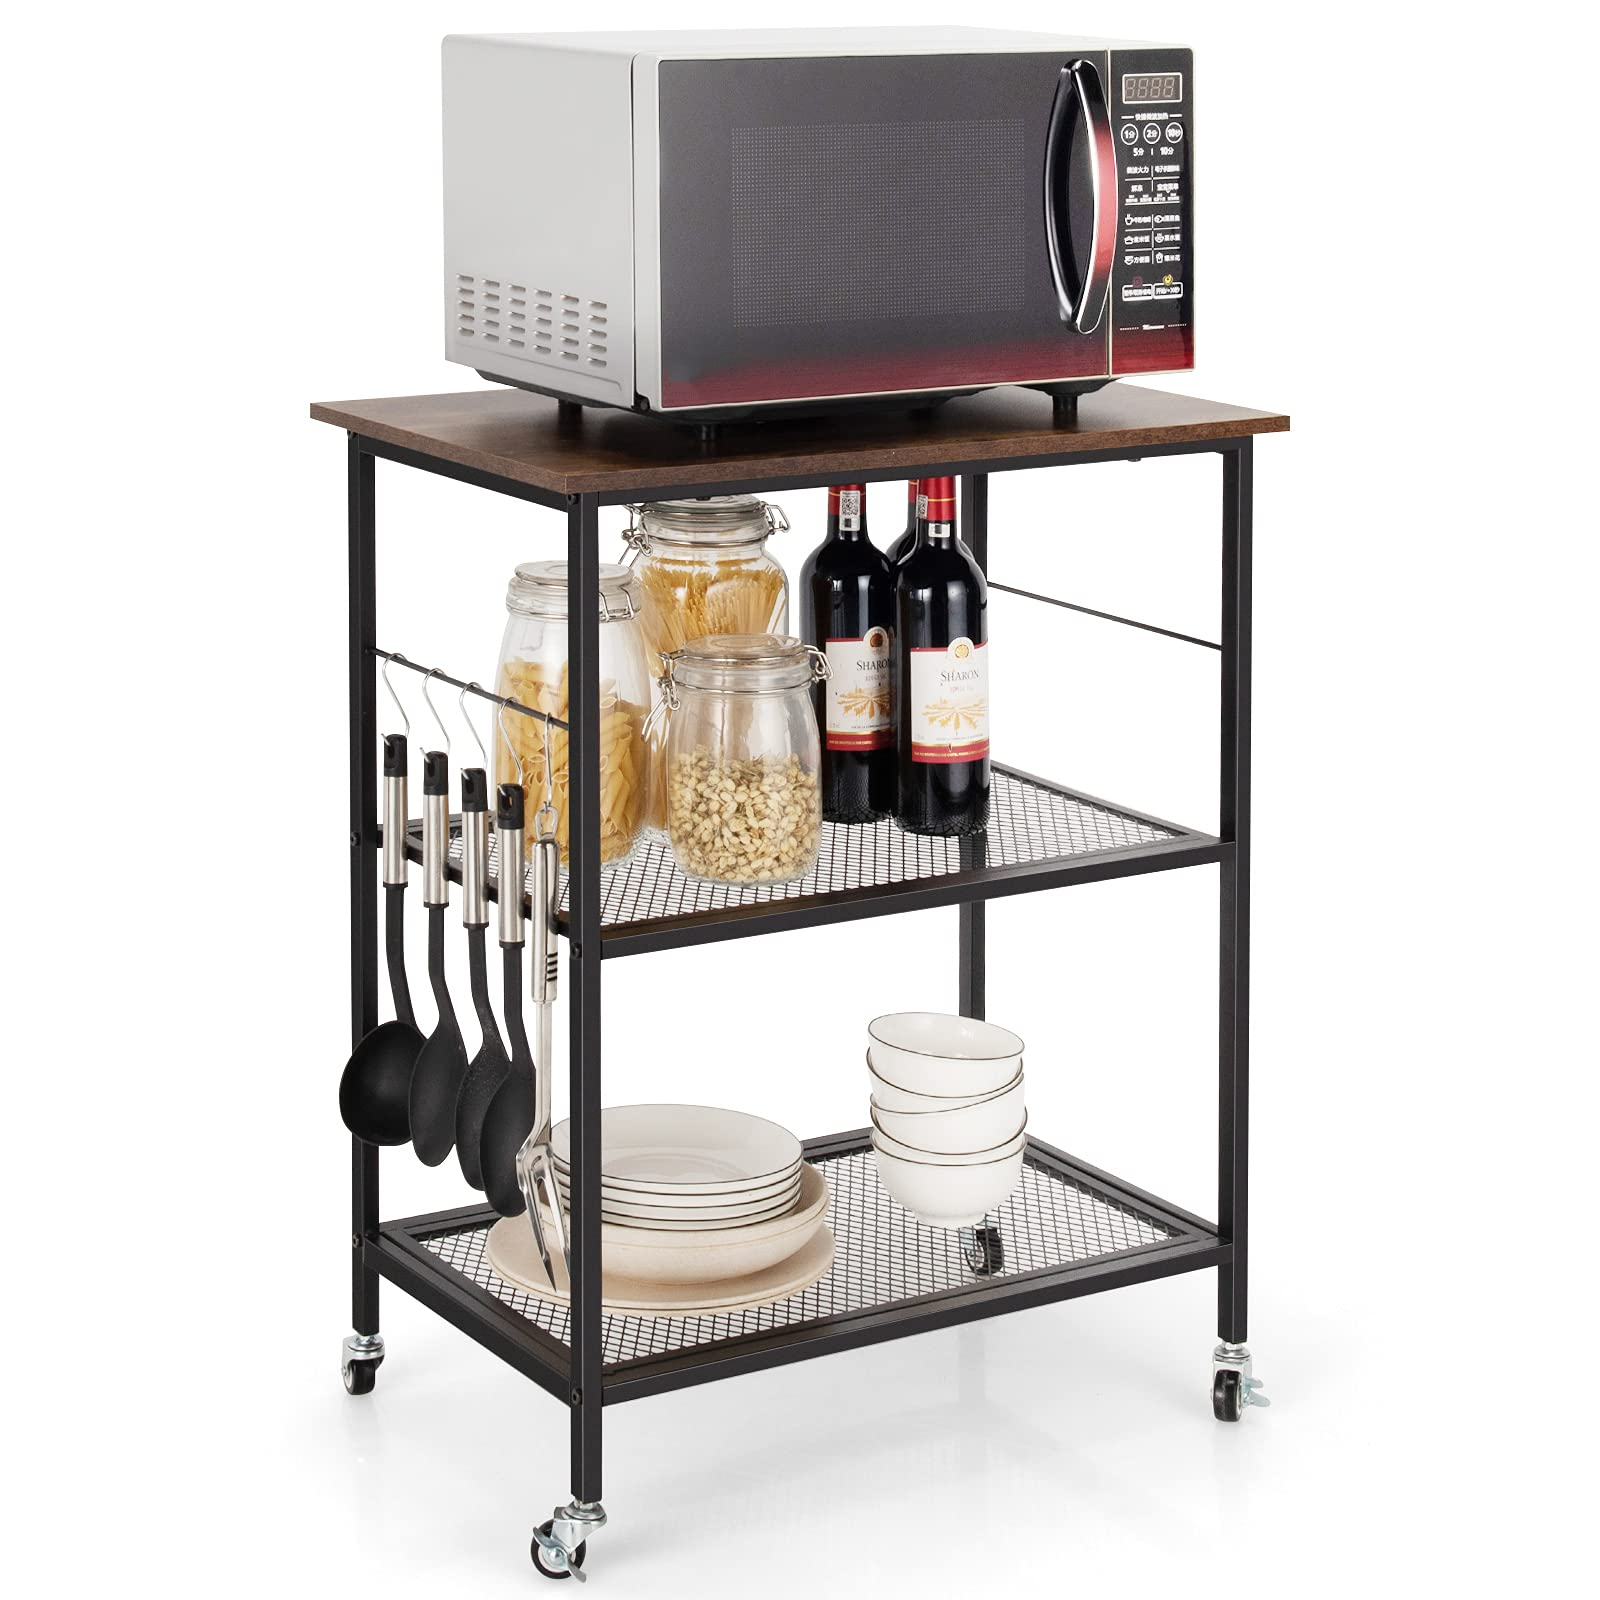 Giantex 3 Tier Kitchen Bake's Rack, Rolling Microwave Cart, Industrial Bar Service Cart